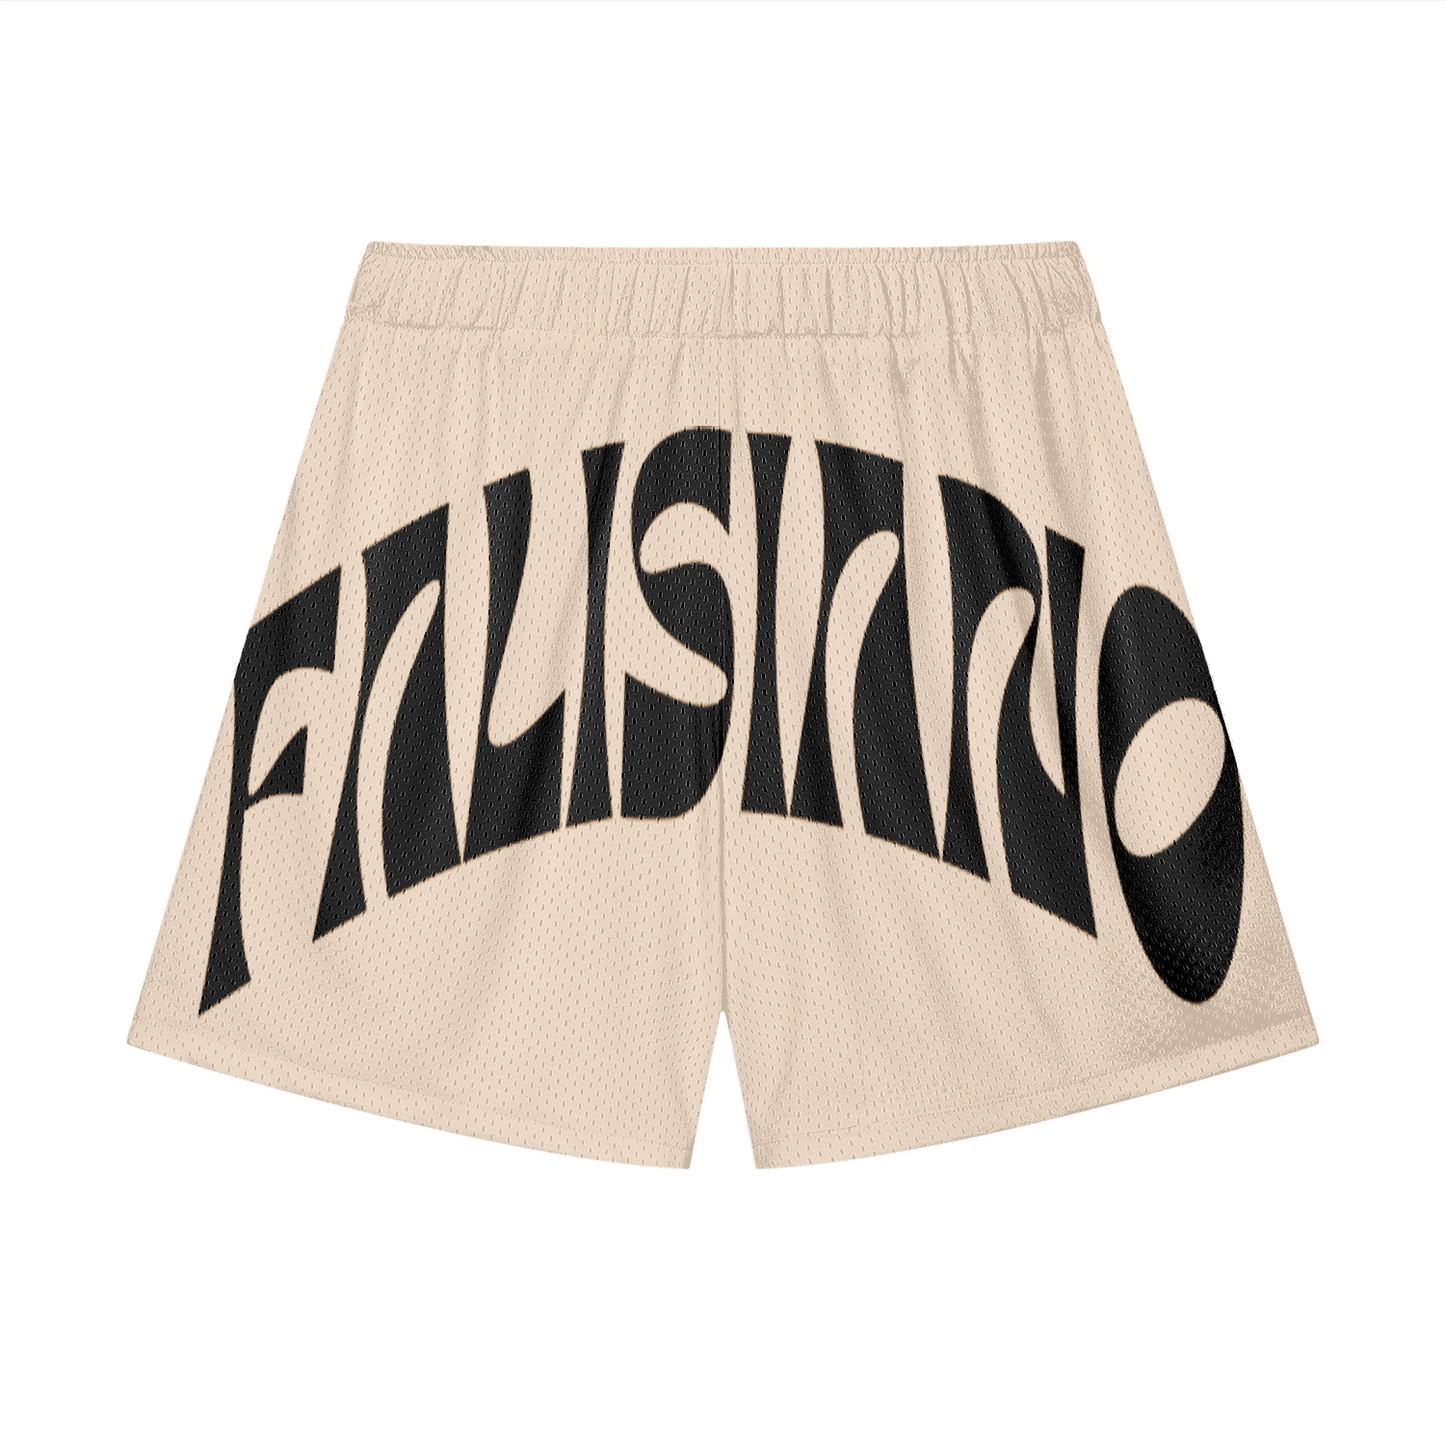 Falisiano Signature Shorts